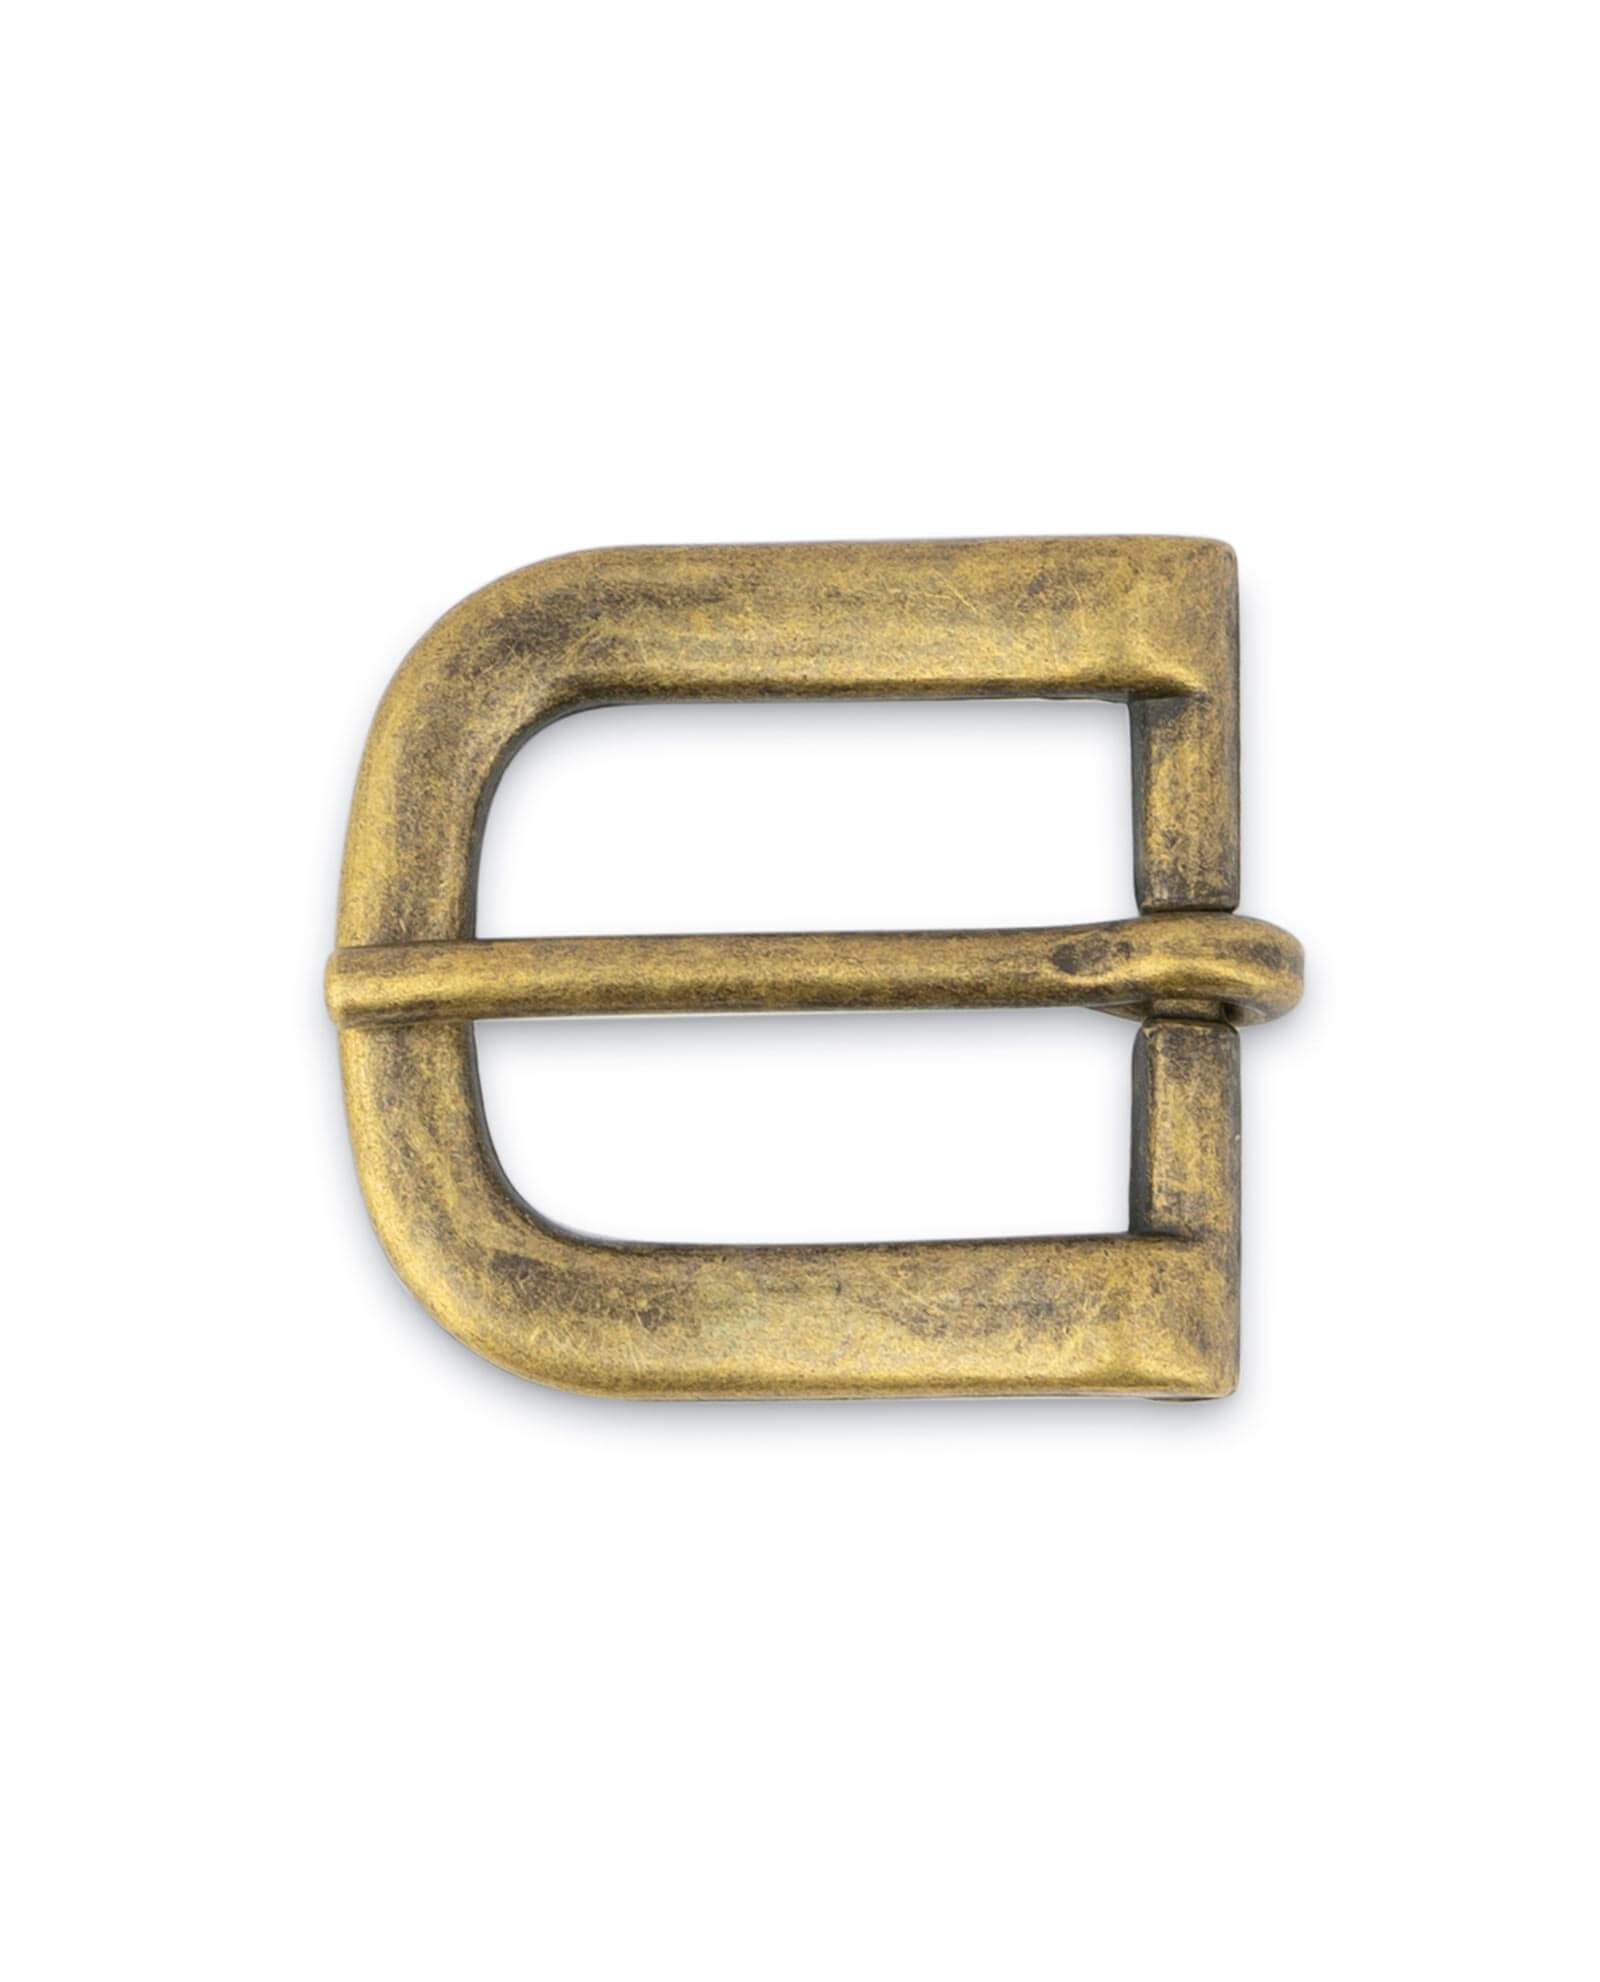 Vintage Snap On Tools Solid Brass Belt Buckle